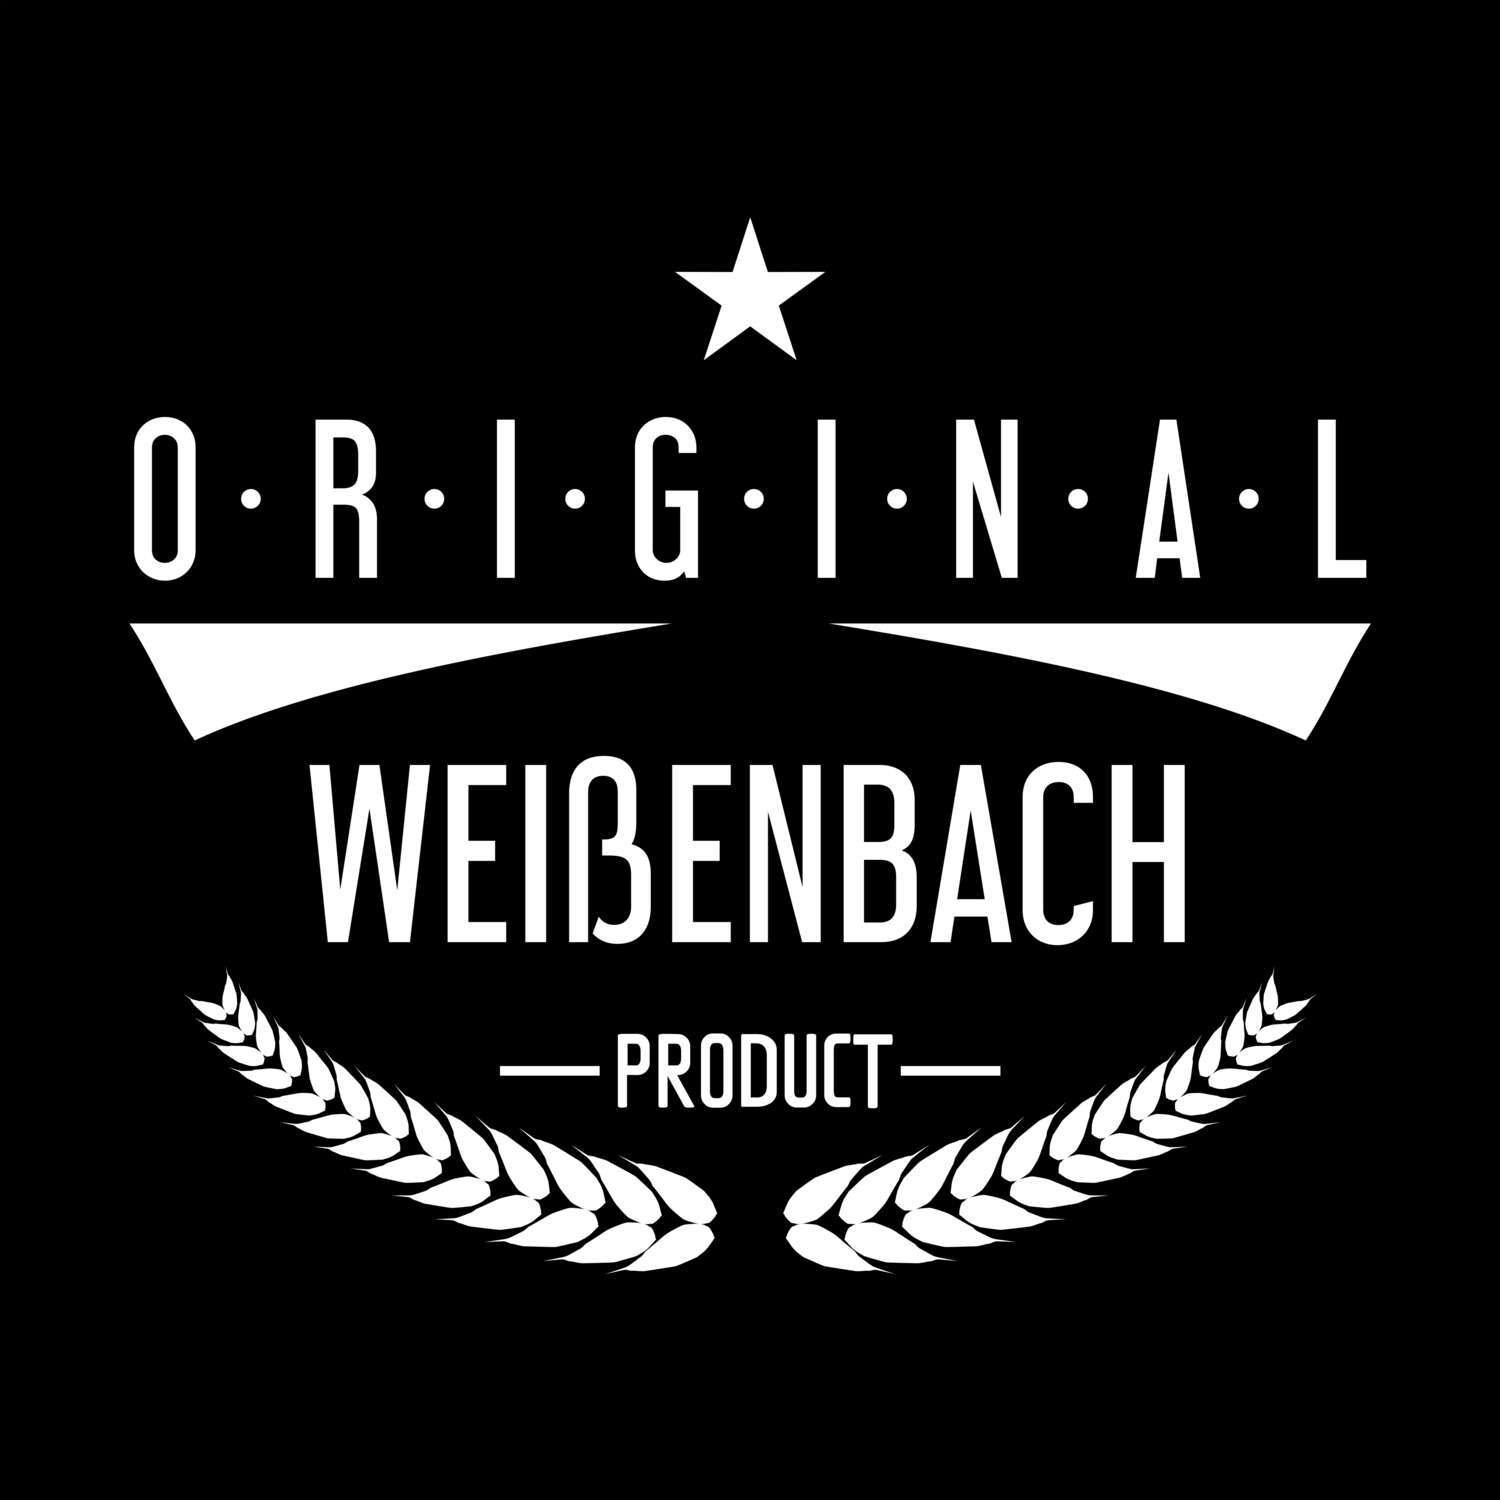 Weißenbach T-Shirt »Original Product«